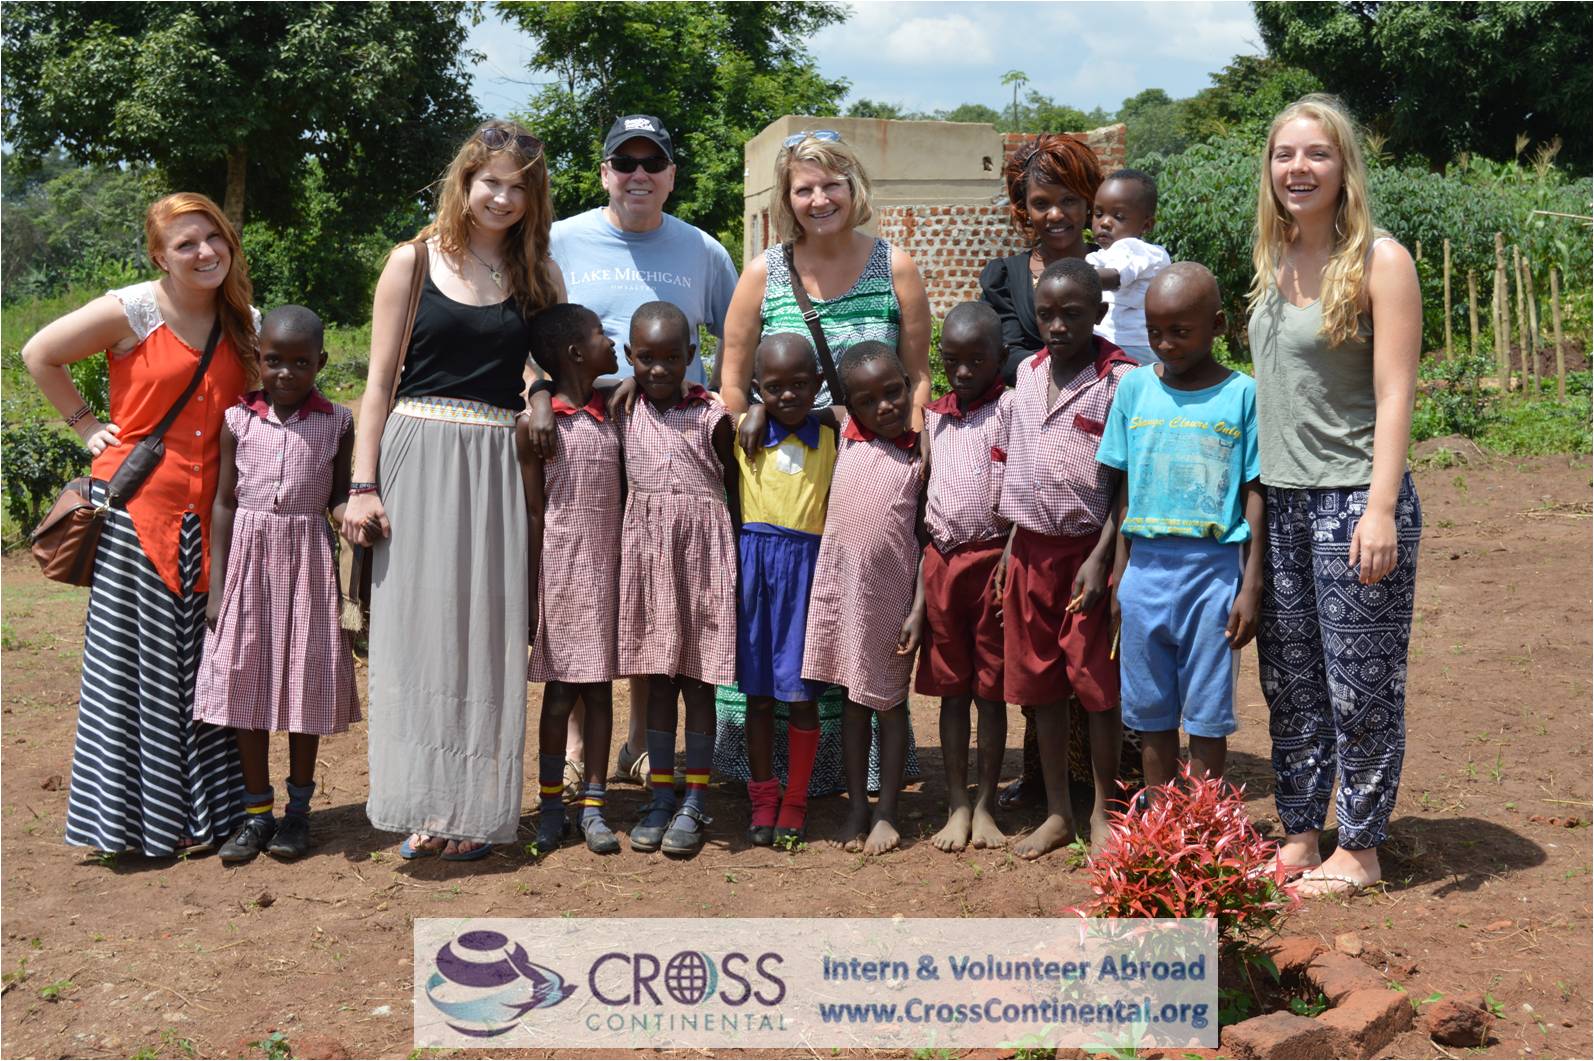 Intern or Volunteer Abroad in Uganda